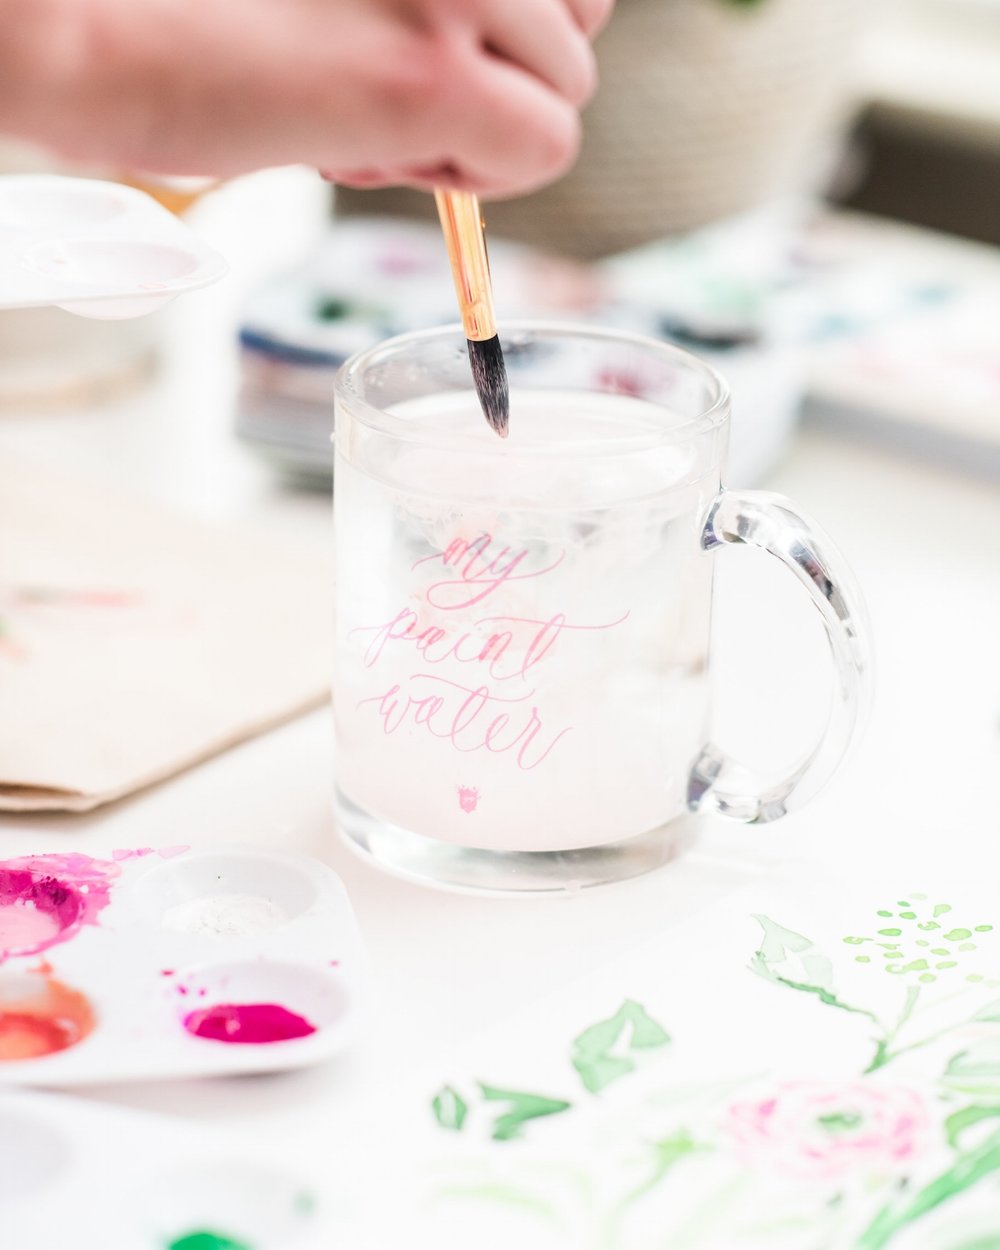 Paint Water Mug Set — Simply Jessica Marie